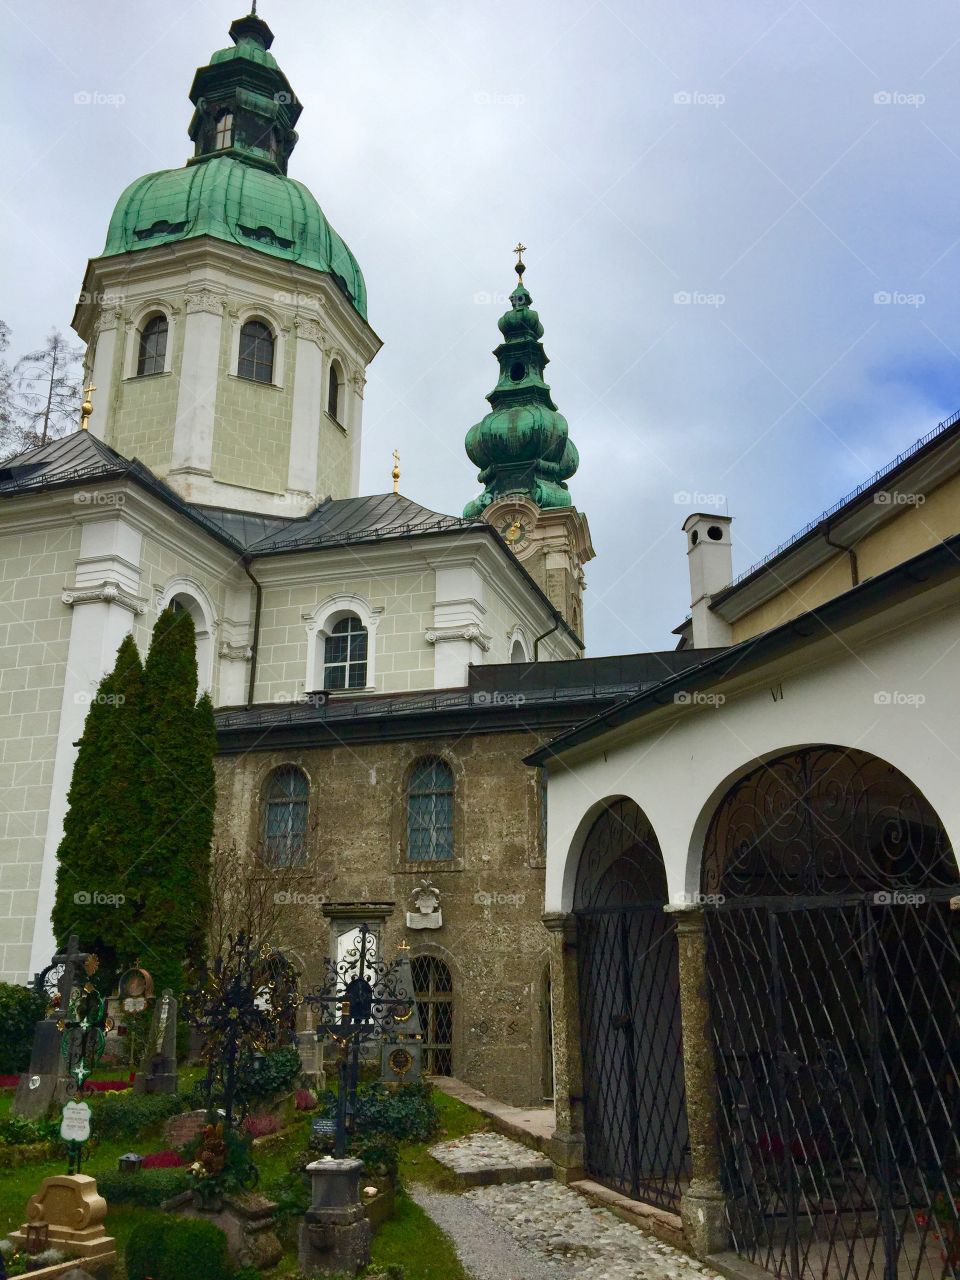 St. Peter's Archabbey, Salzburg, Austria